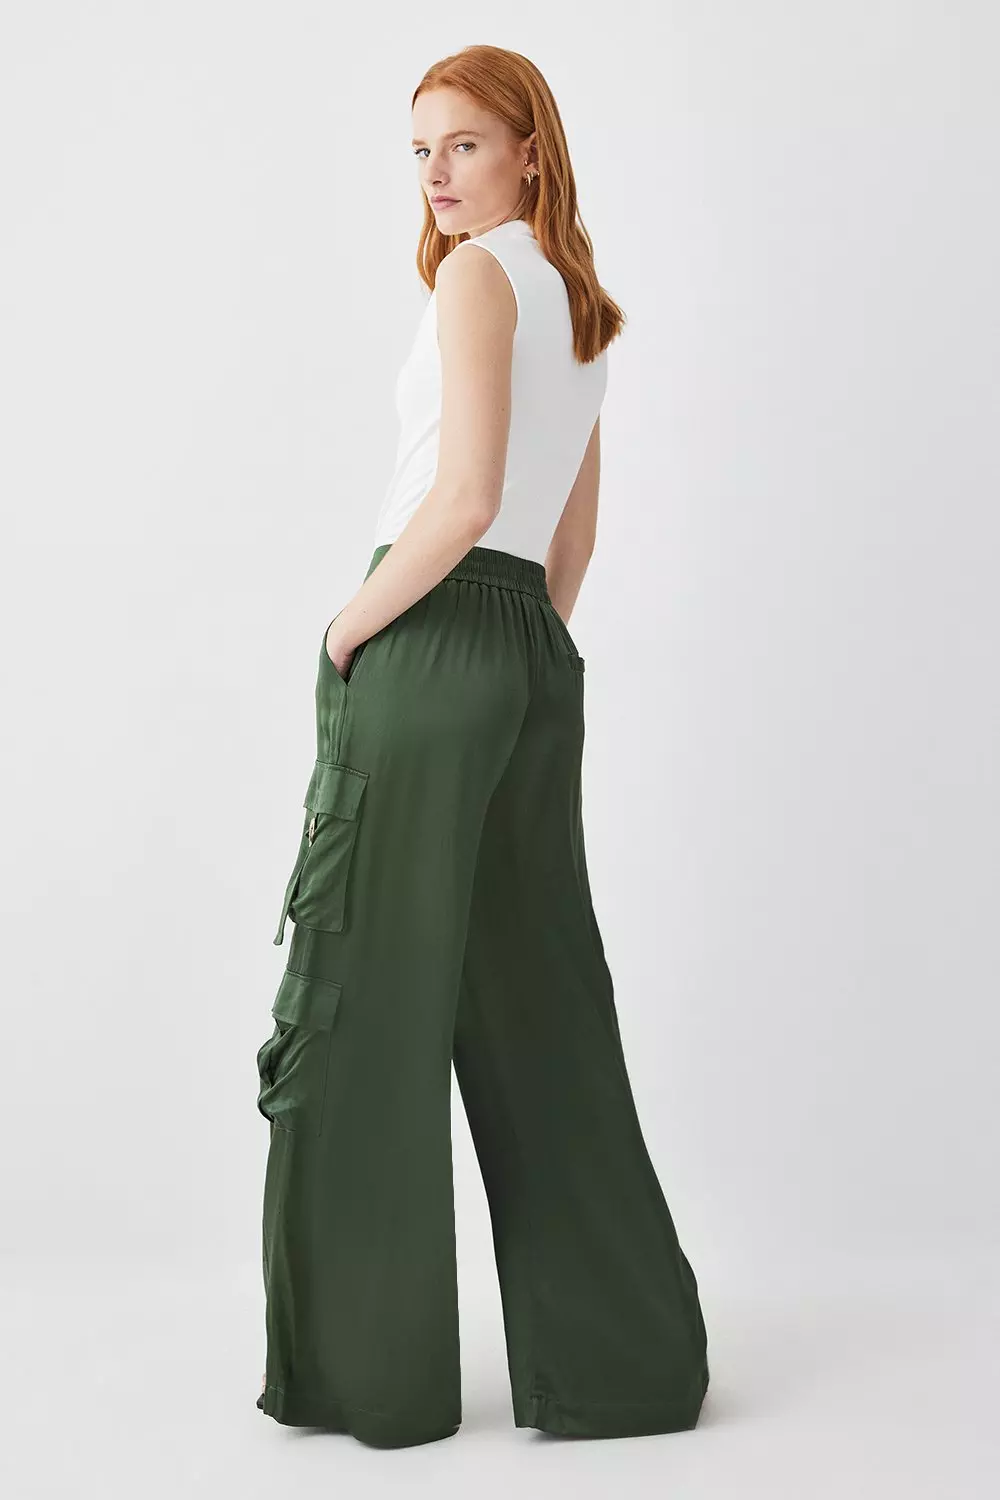 Zara White Satin Cargo Trousers (Pants), Women's Fashion, Bottoms